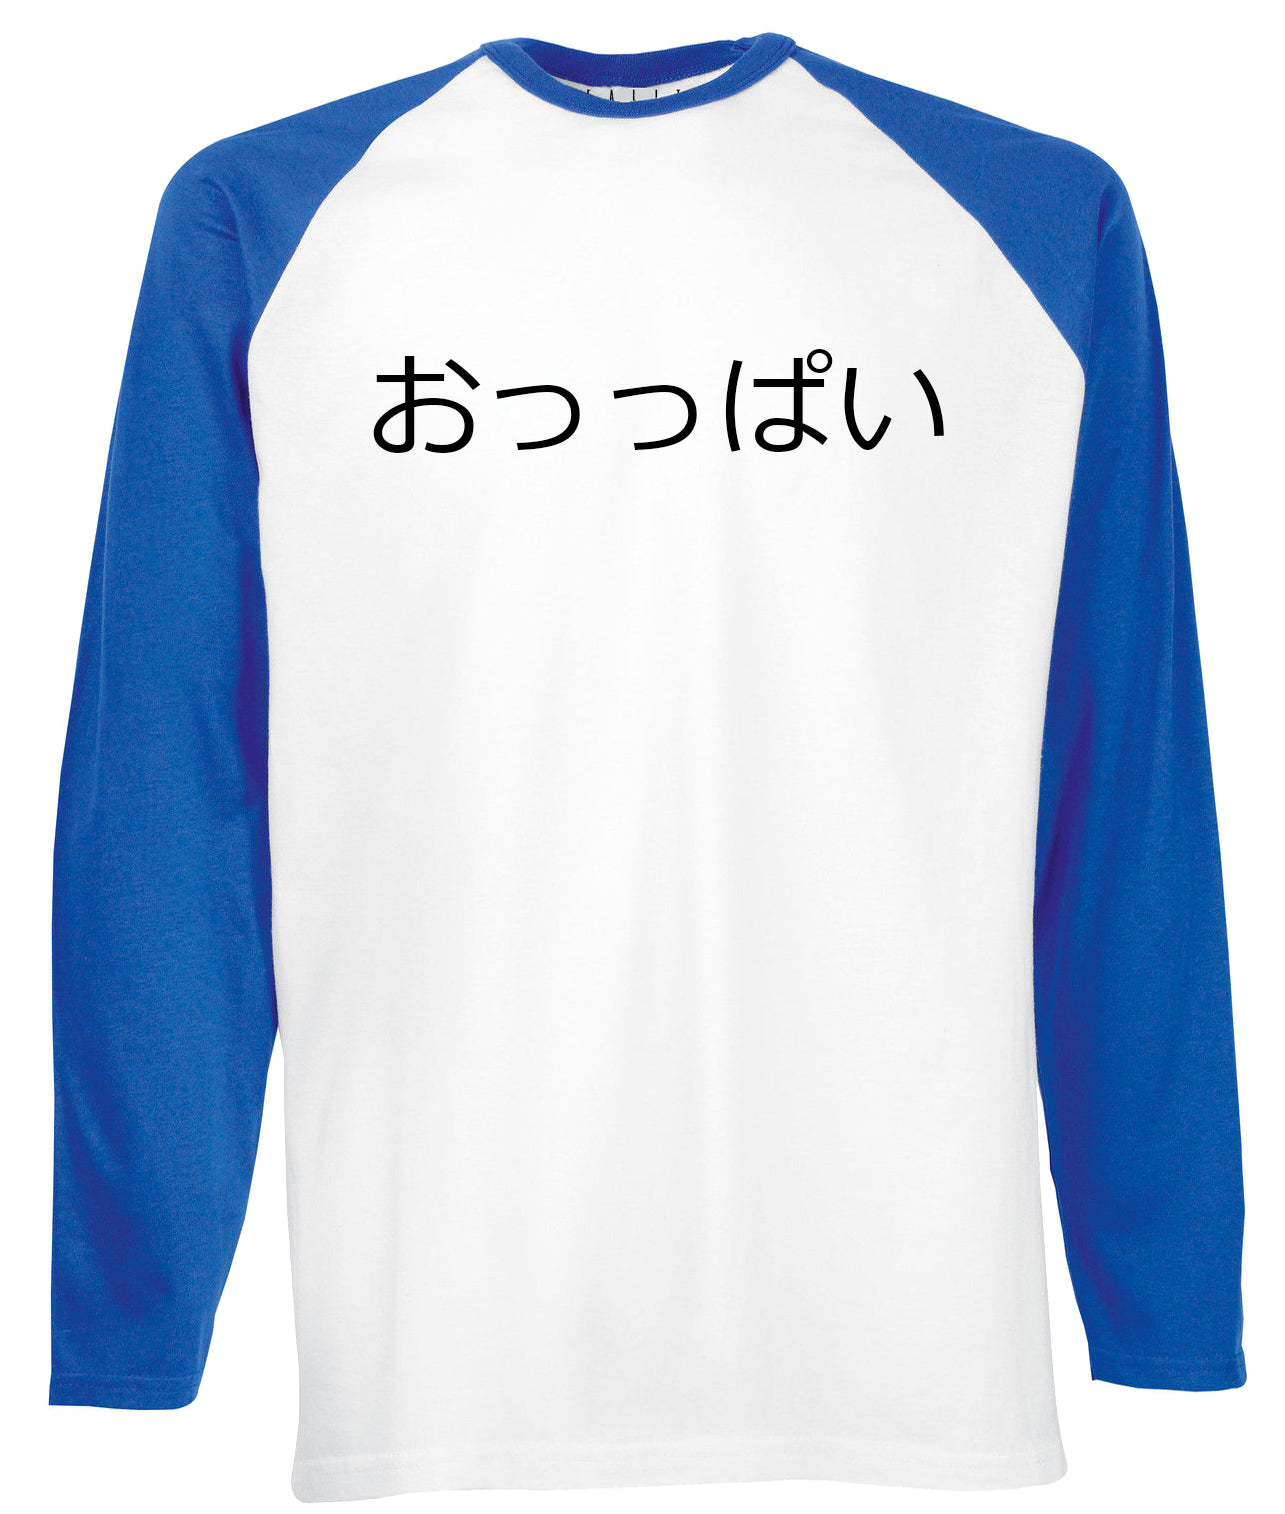 Japanese Boobs Oppai Slogan Long Sleeve Mens Baseball Shirt Funny